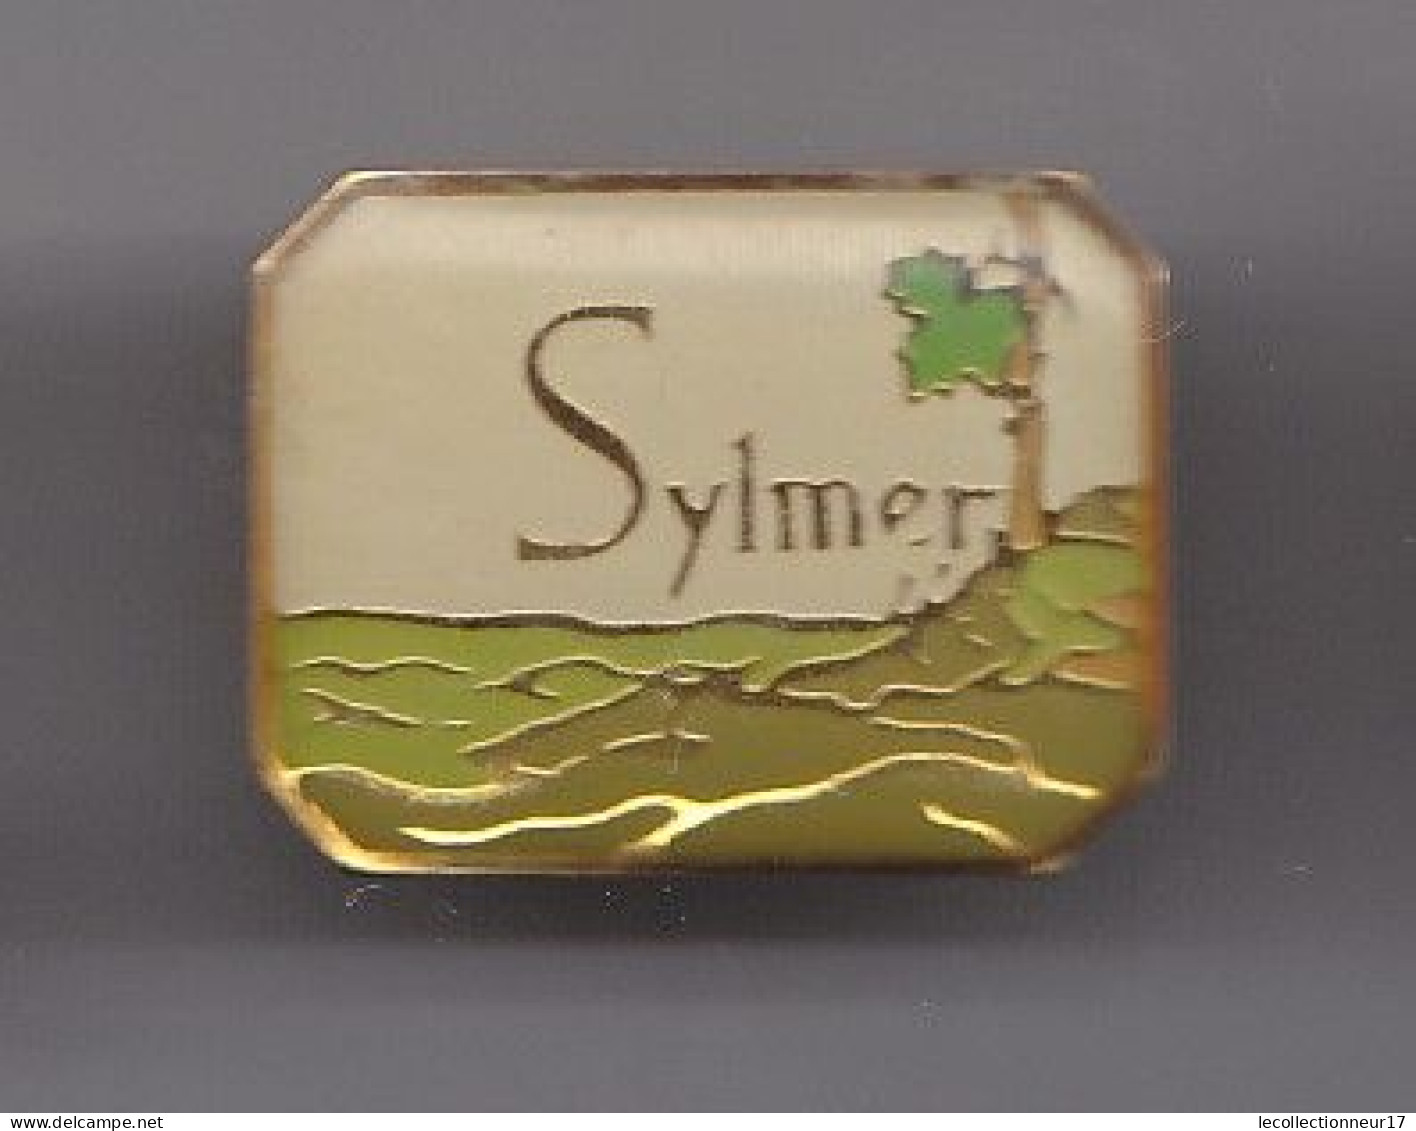 Pin's Sylmer Vin Vigne Cépage Réf 5569 - Beverages